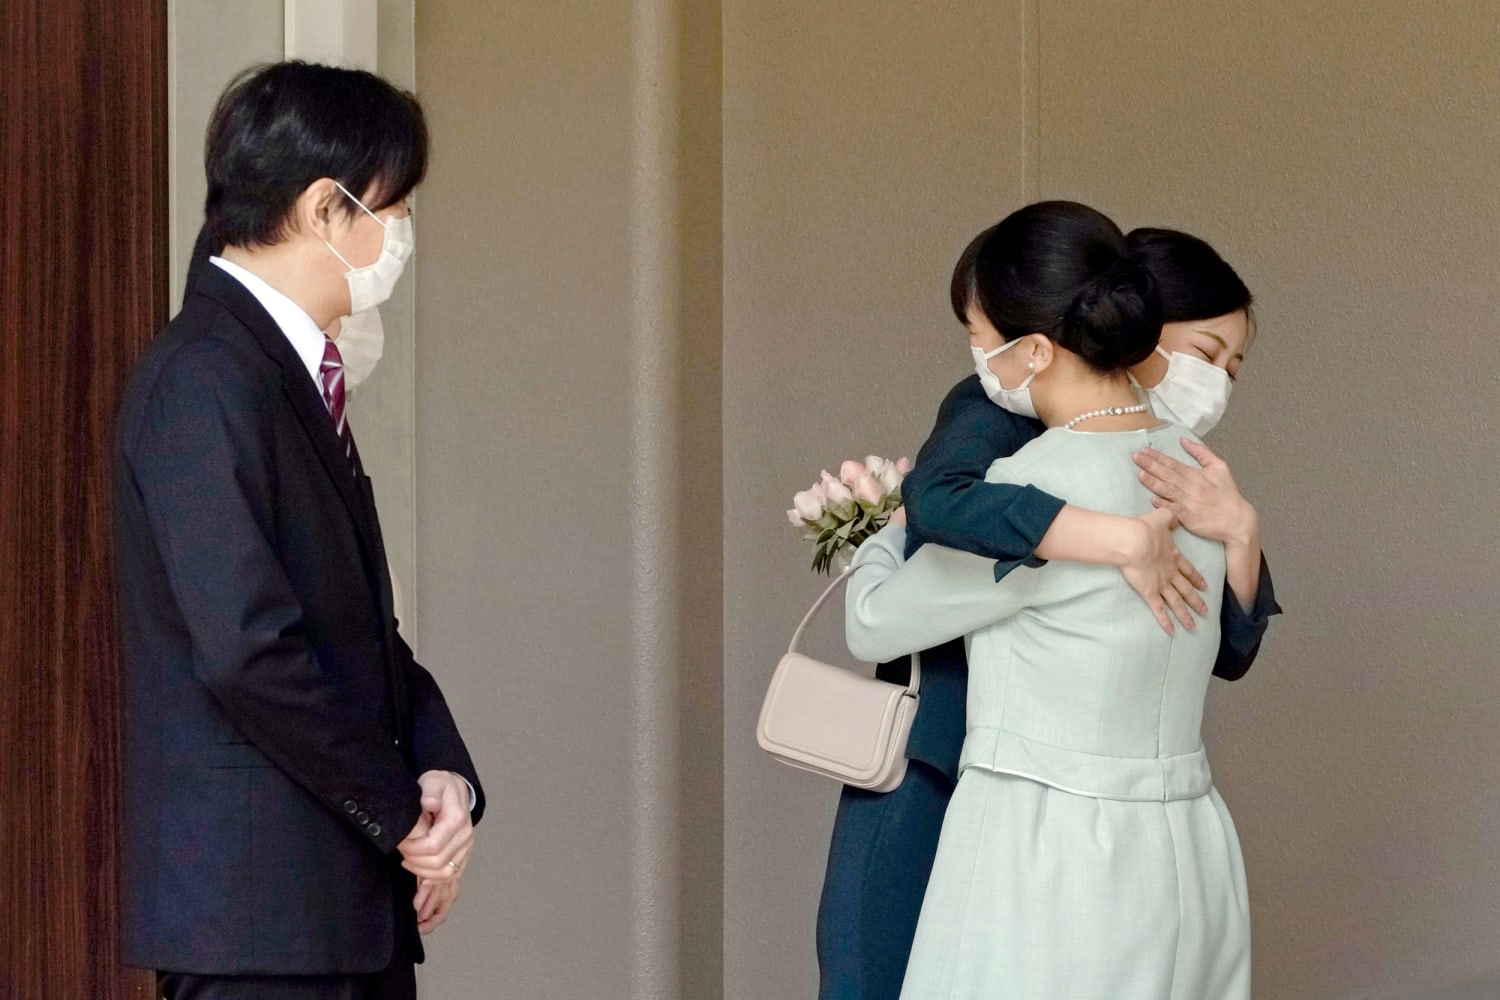 APJapans Princess Mako marries commoner